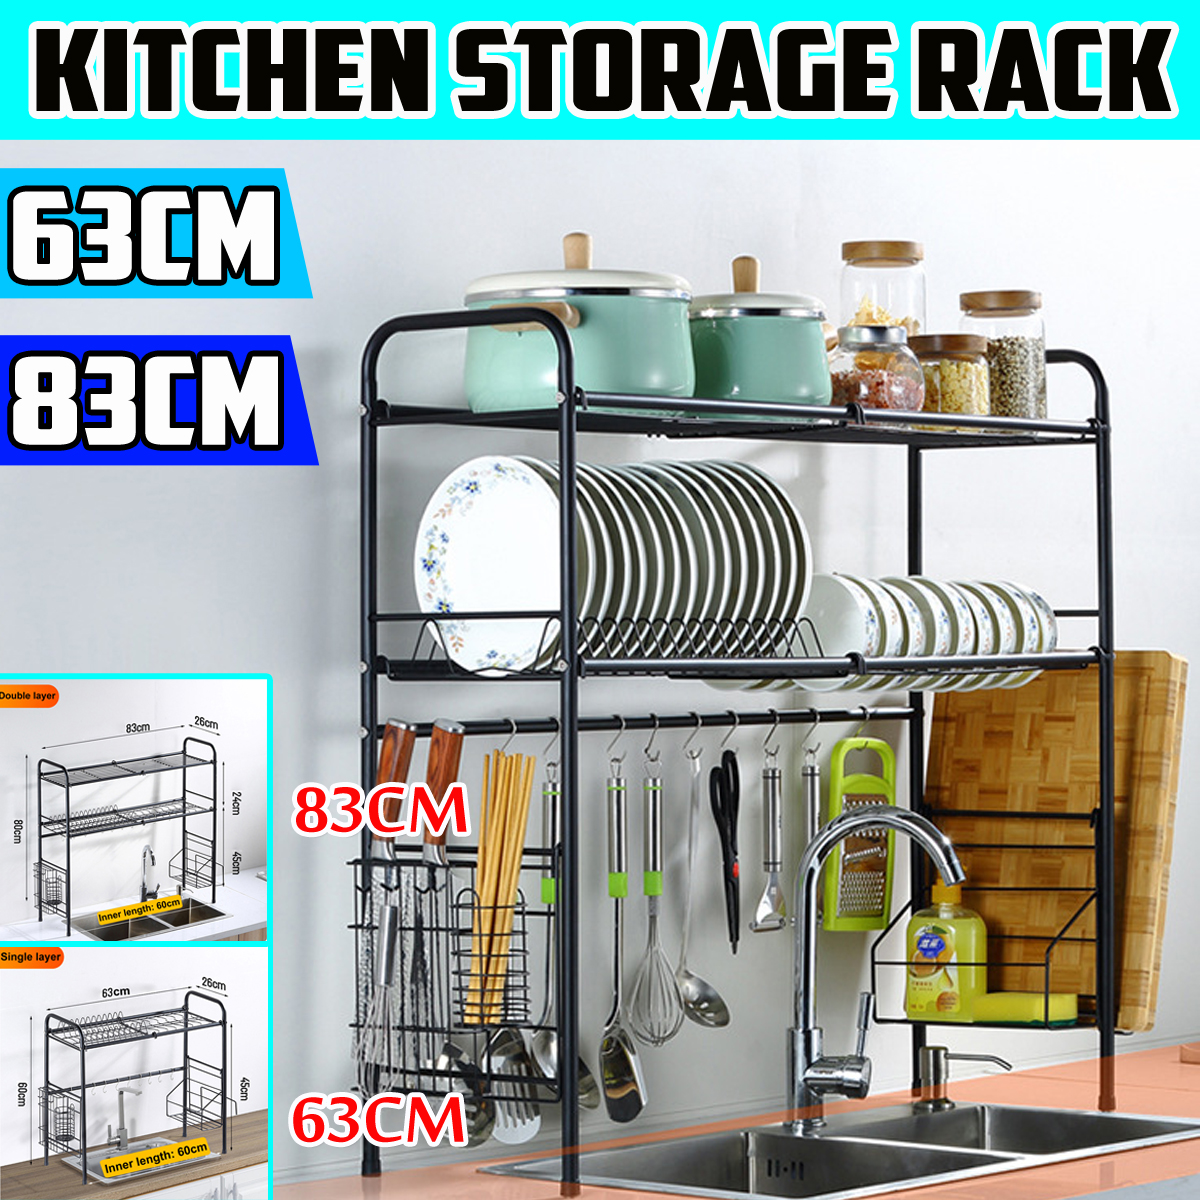 6383cm-Sink-Storage-Rack-12-Layers-Kitchen-Over-Sink-Dish-Drying-Drain-Shelf-Dish-Chopsticks-Storage-1775131-1